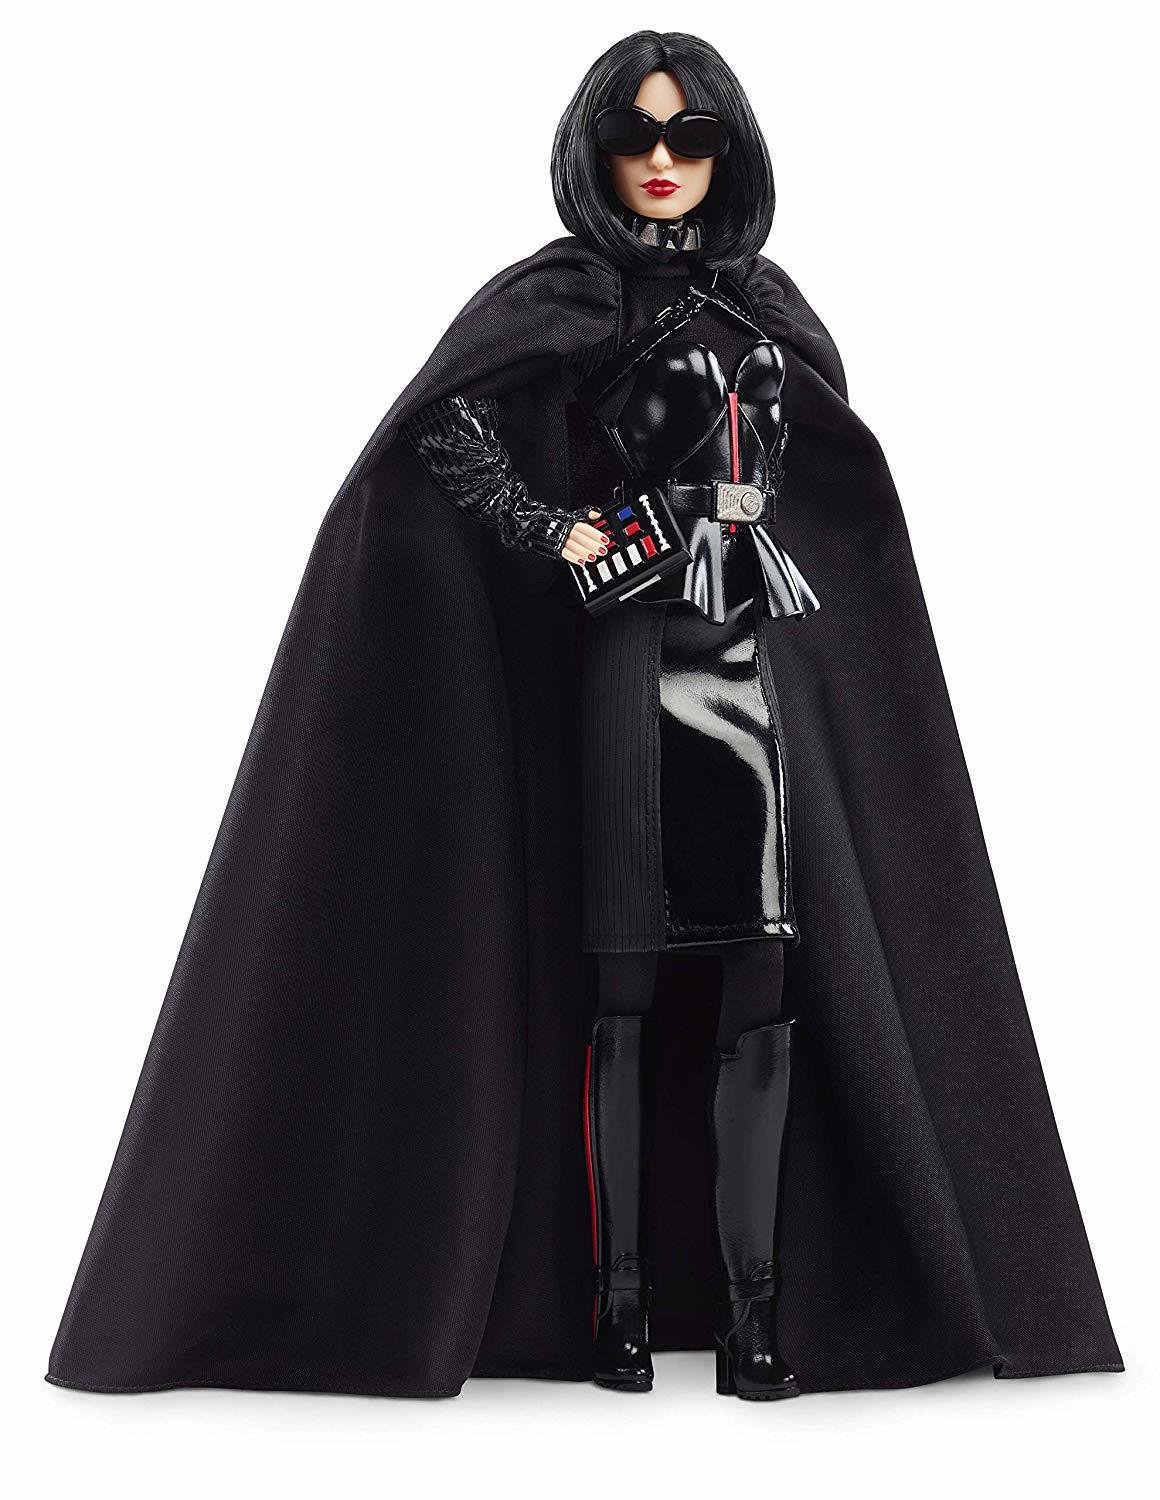 Barbie Star Wars Darth Vader x Doll